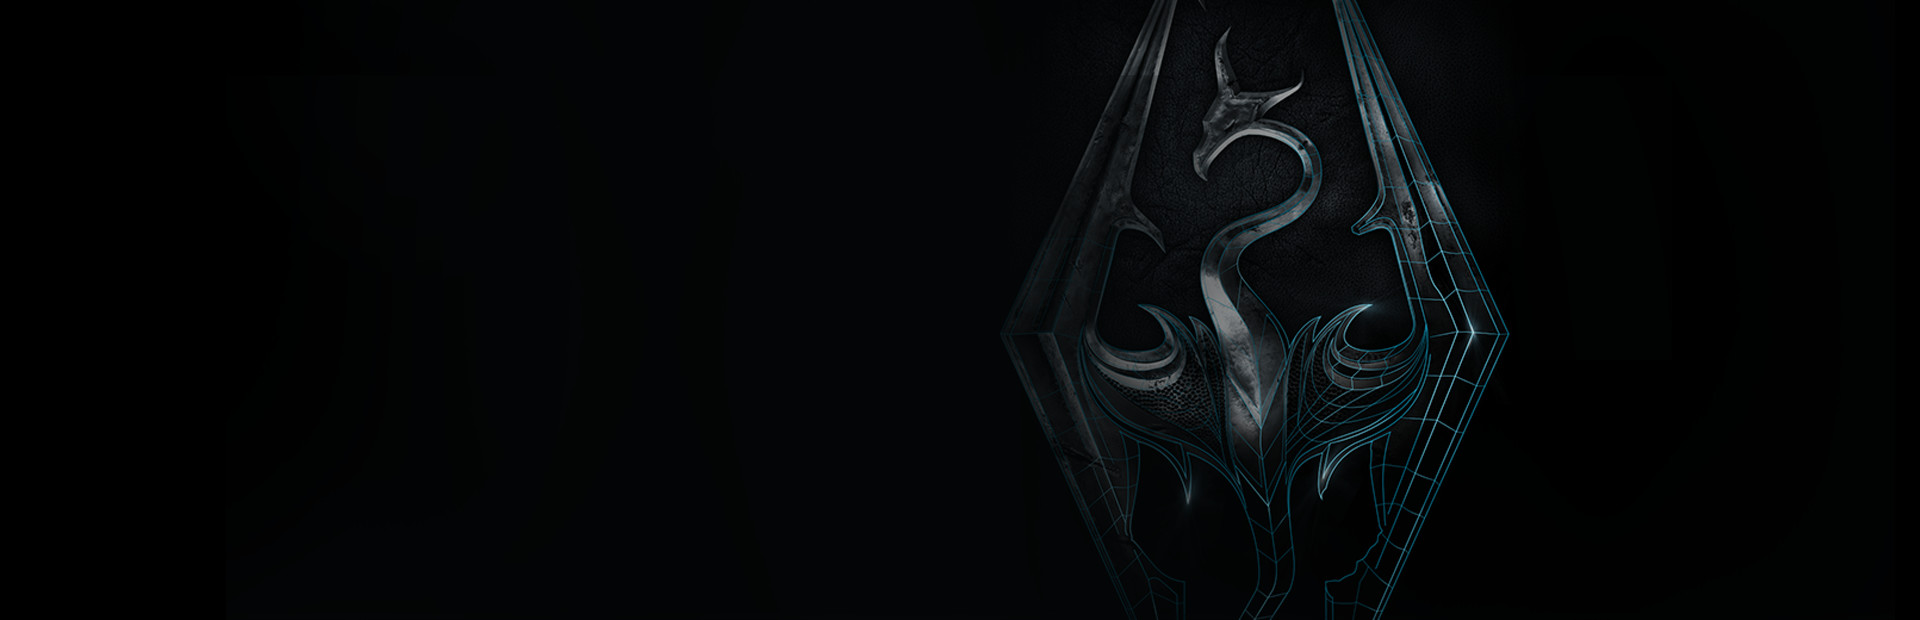 The Elder Scrolls V: Skyrim VR cover image